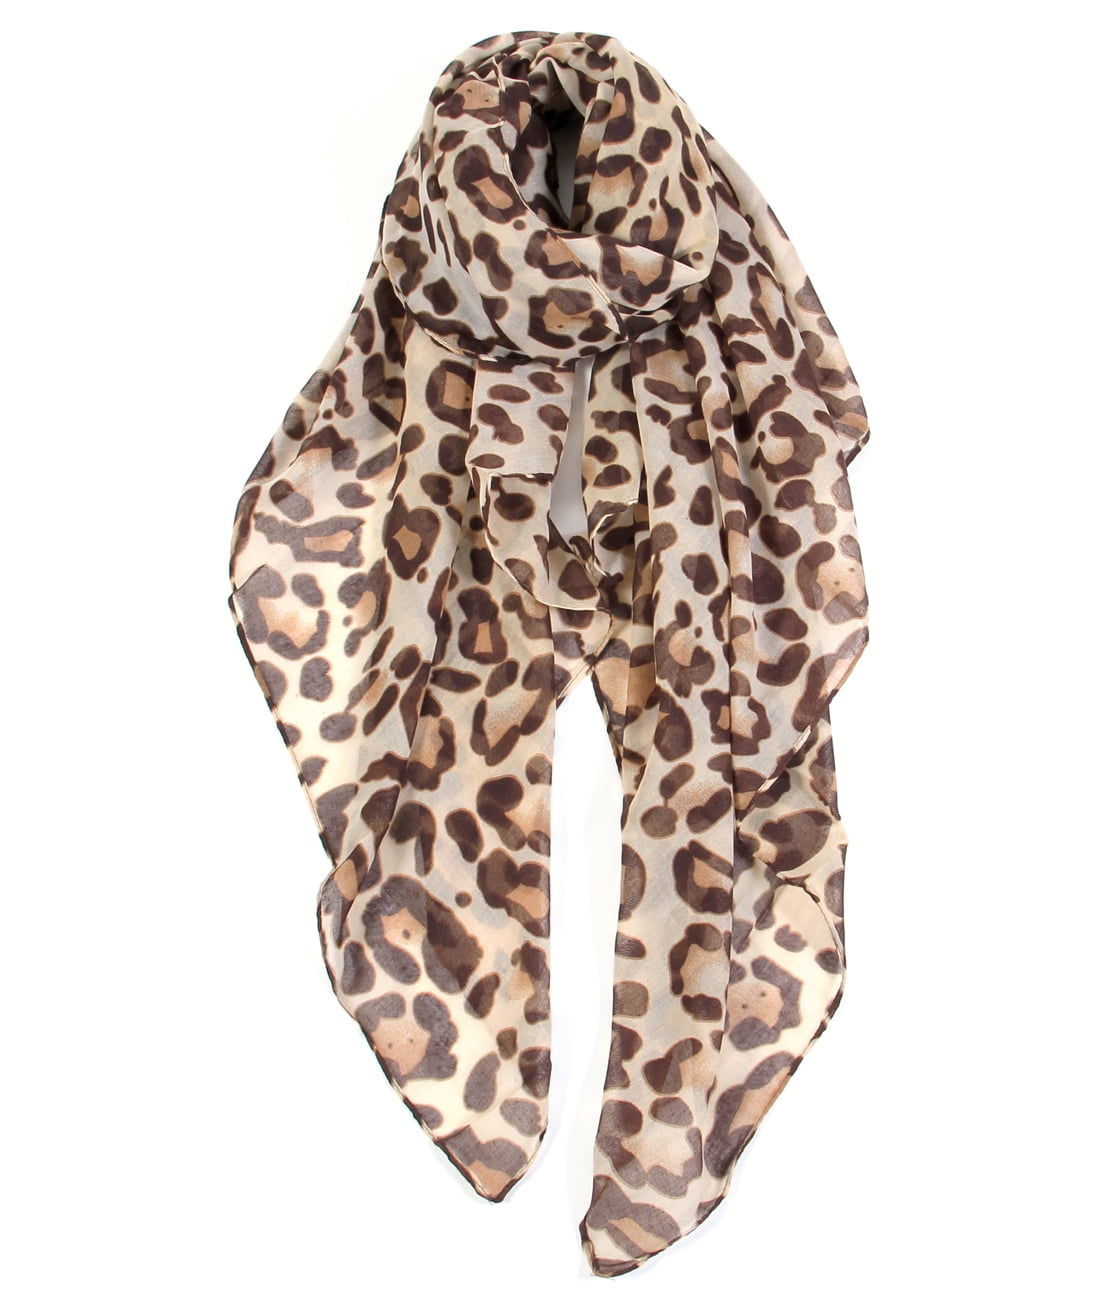 NEW Animal Leopard Print Scarf Shawl Wrap Stole Chiffon Large Long Soft Light UK 